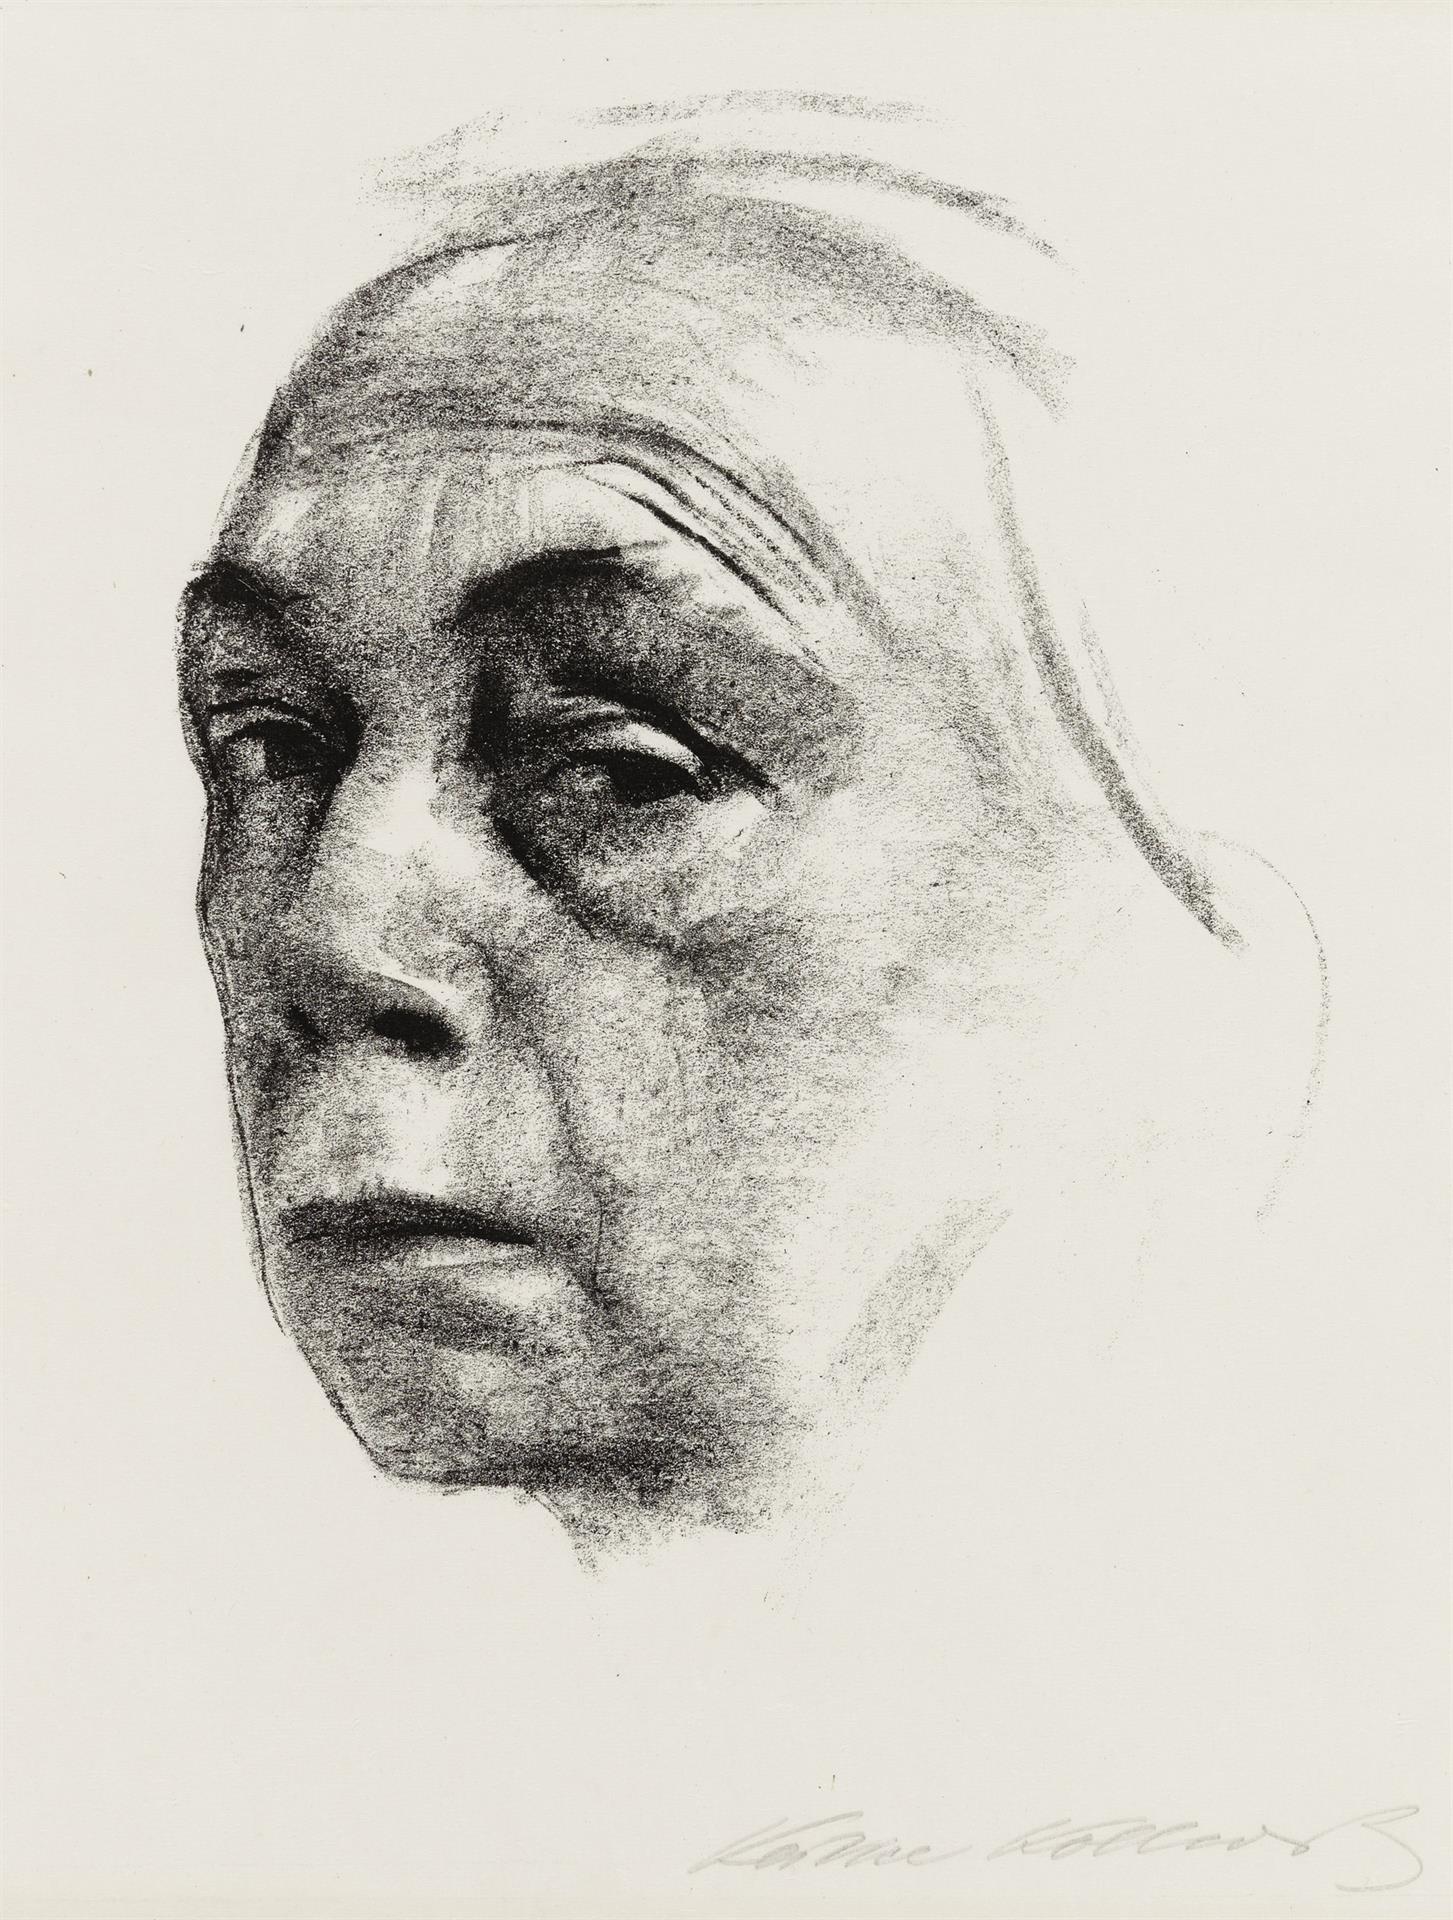 Käthe Kollwitz, Self-portrait, 1924, crayon lithograph (transfer), Kn 209 b, Cologne Kollwitz Collection © Käthe Kollwitz Museum Köln